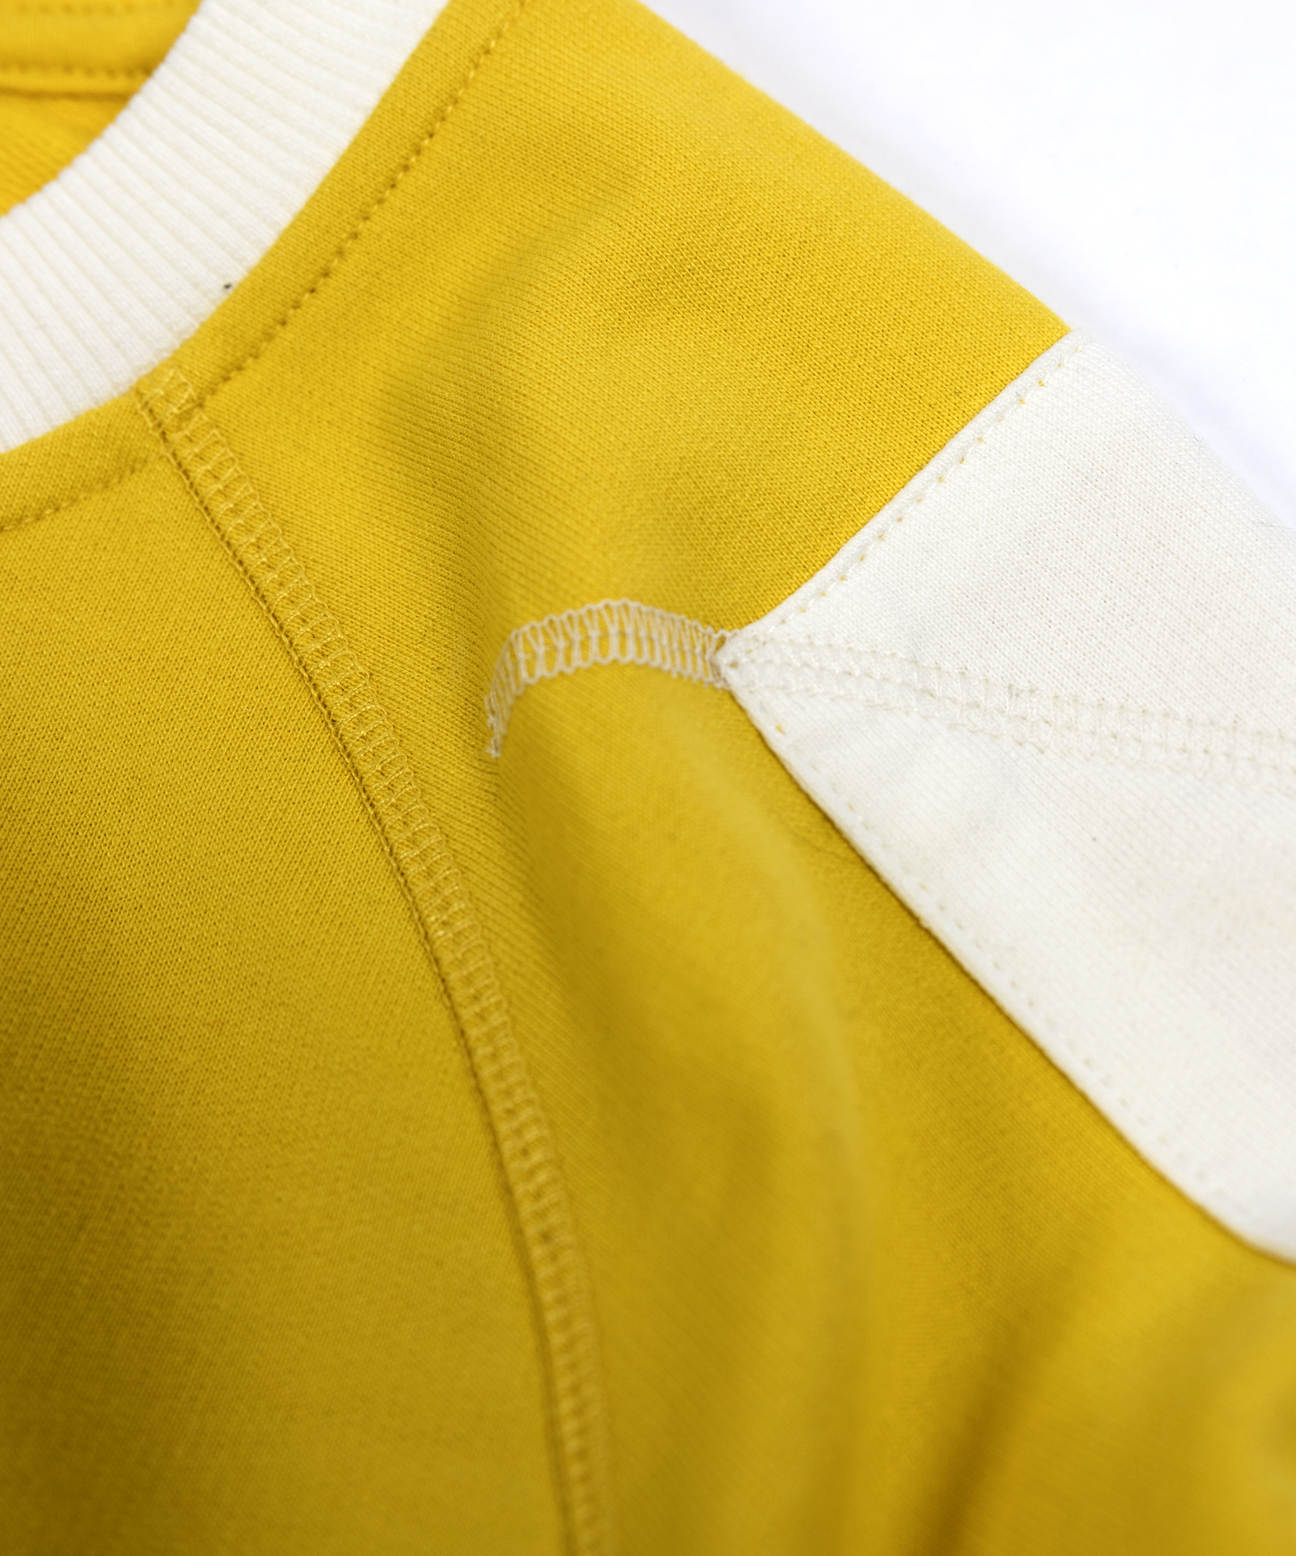 mens-yellow-Legion-sweatshirt-8.png